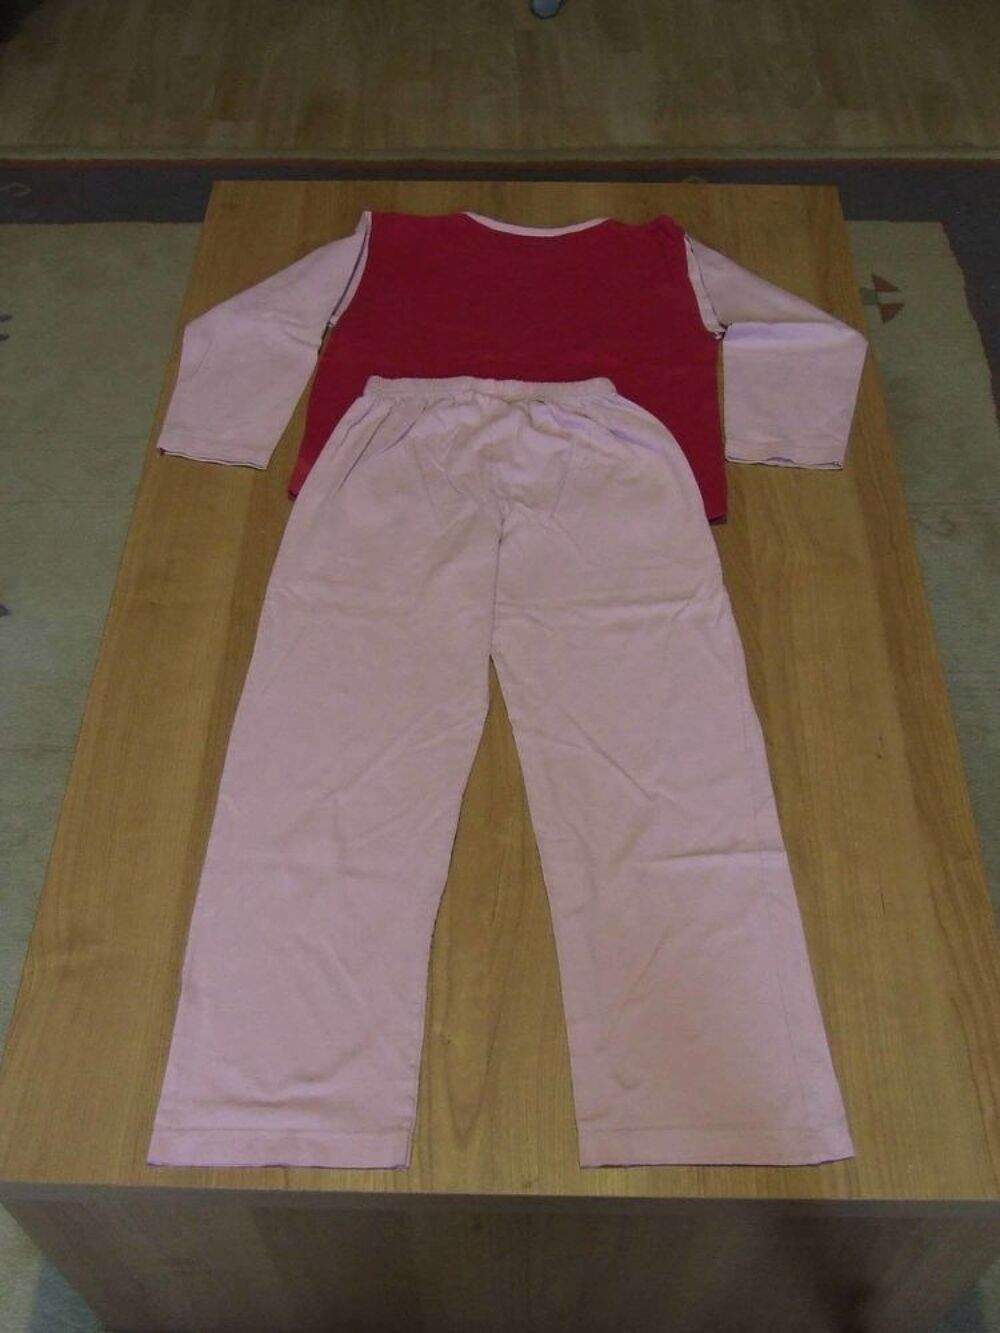 Pyjama 2 pi&egrave;ces, HELLO KITTY, Rose, 8&nbsp;ans (126&nbsp;cm) Vtements enfants